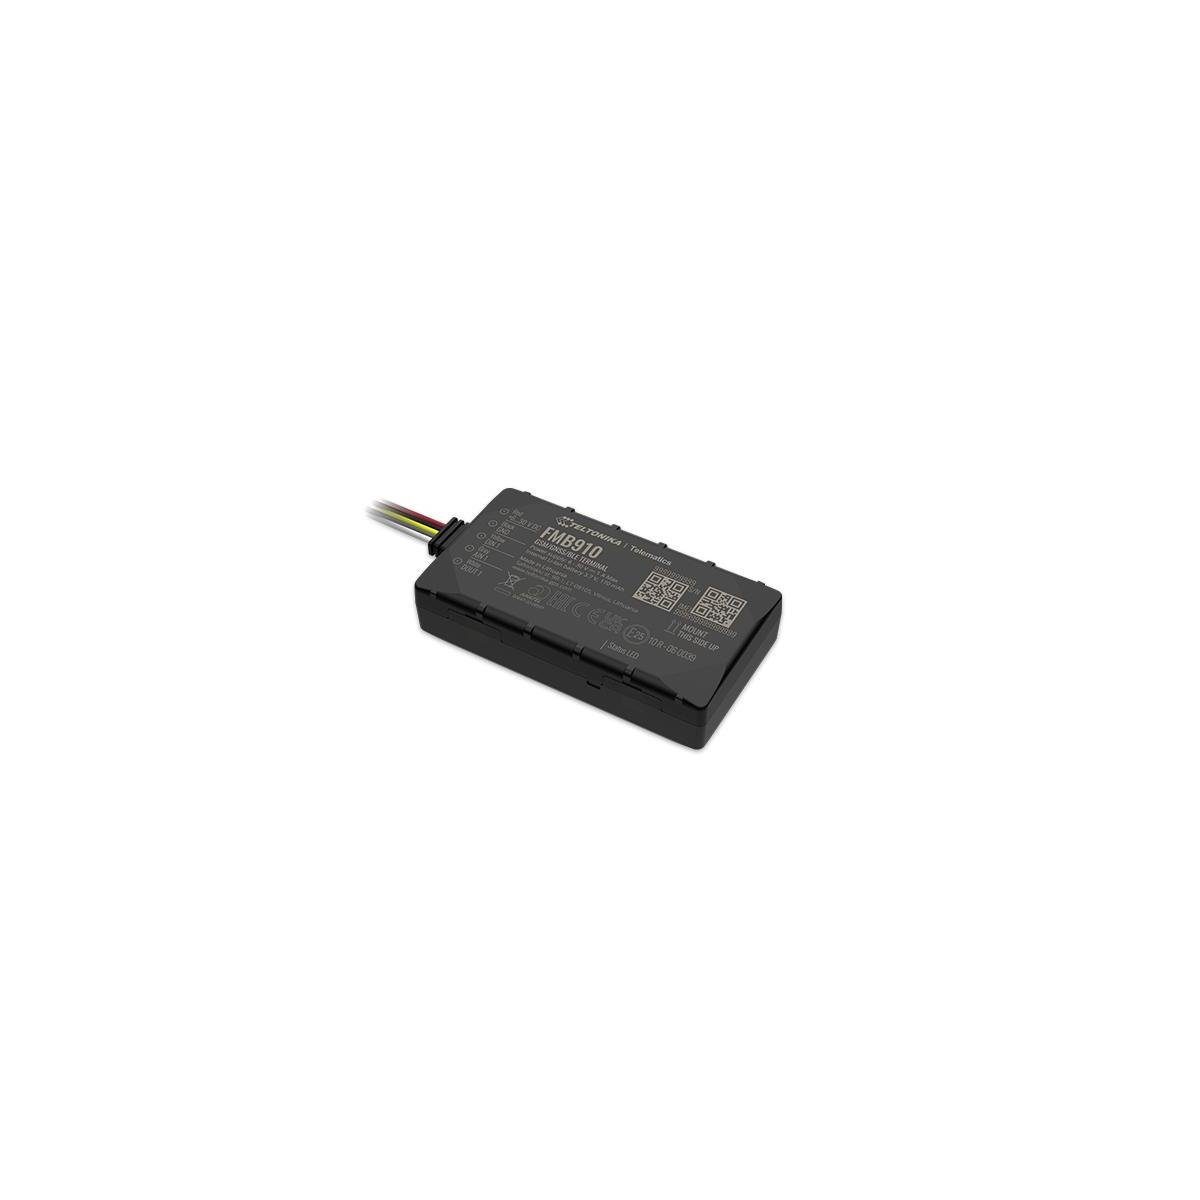 Teltonika FMB91093IN01 - Smart Tracker interner Backup-Batterie mit GPS-Tracker